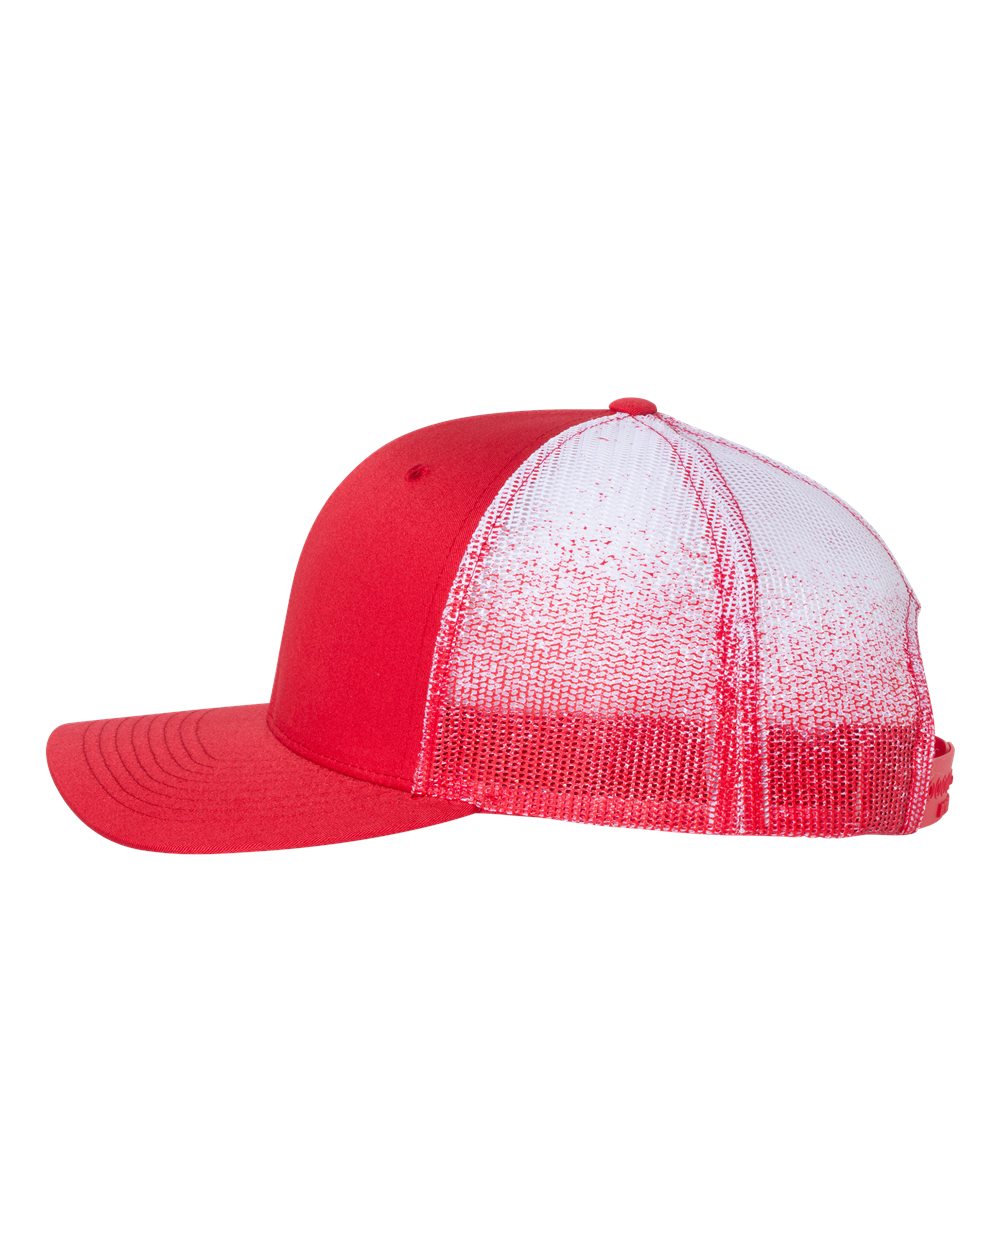 Arkansas Razorbacks Jumping Hog Classic 3D Patterned Mesh Snapback Trucker Hat- Red/ Red to White Fade - Ten Gallon Hat Co.